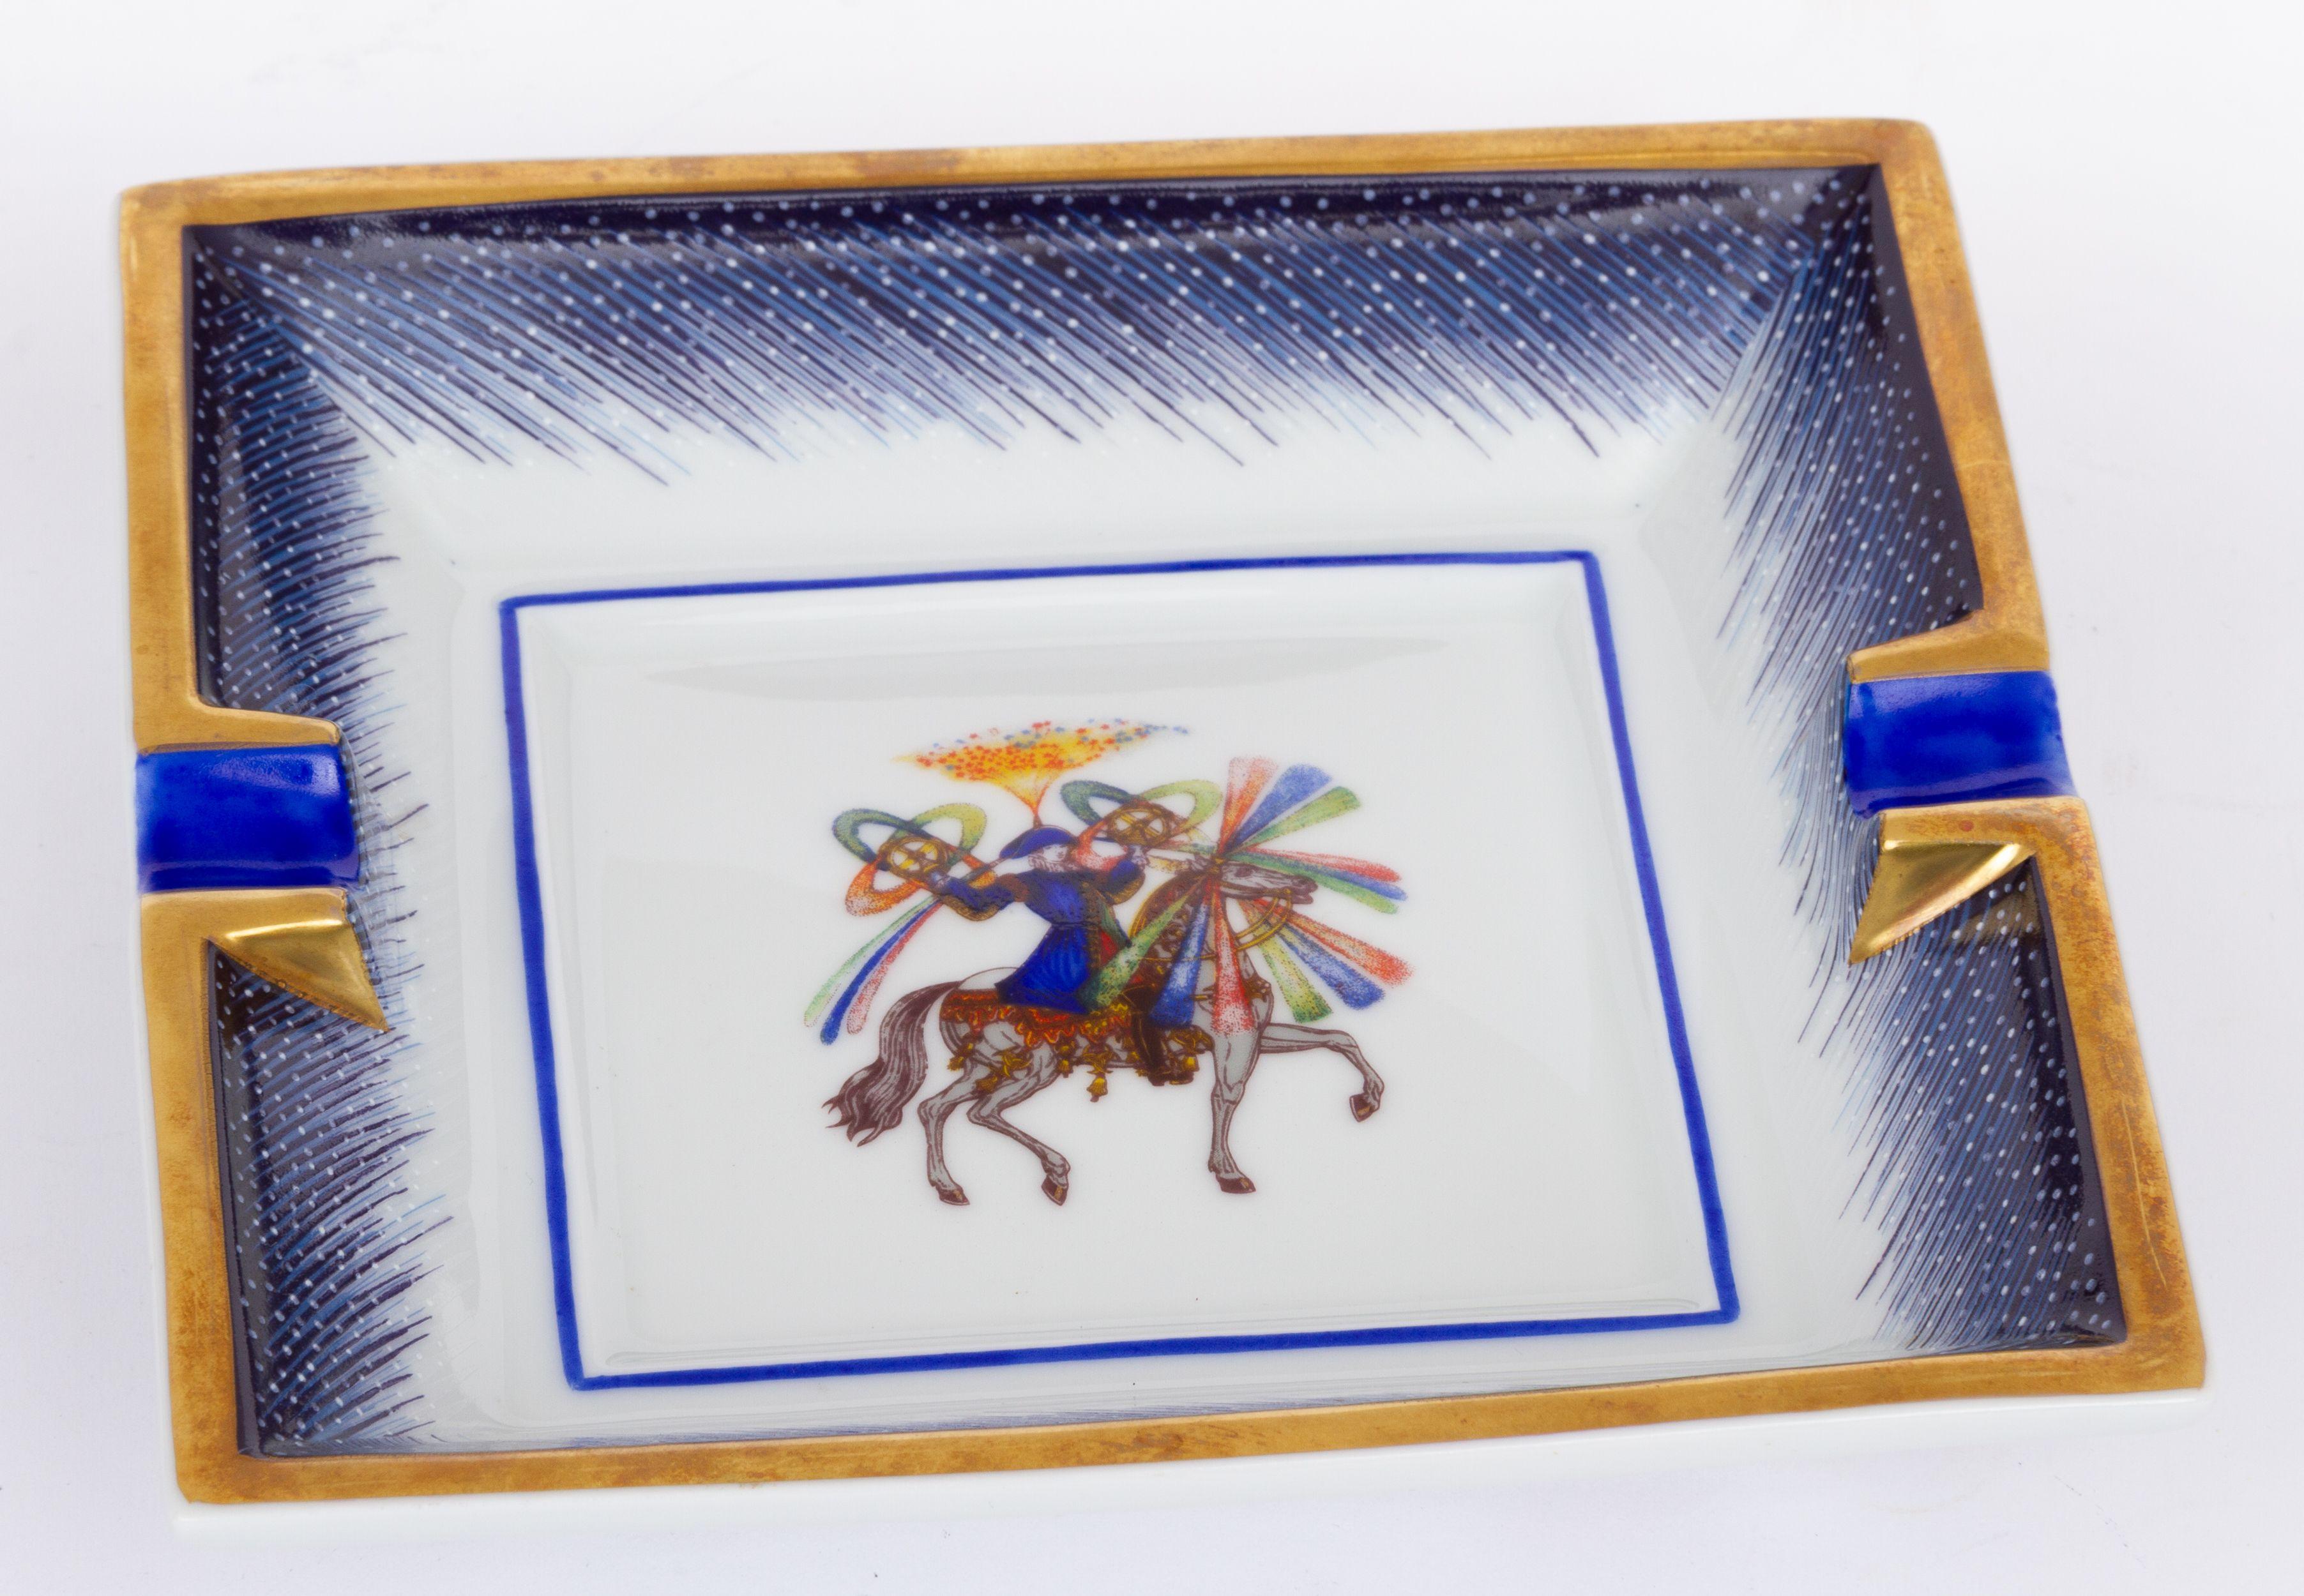 Hermès vintage porcelain ashtray in blue. Collectible feux d artifice design. The piece is in excellent condition.
